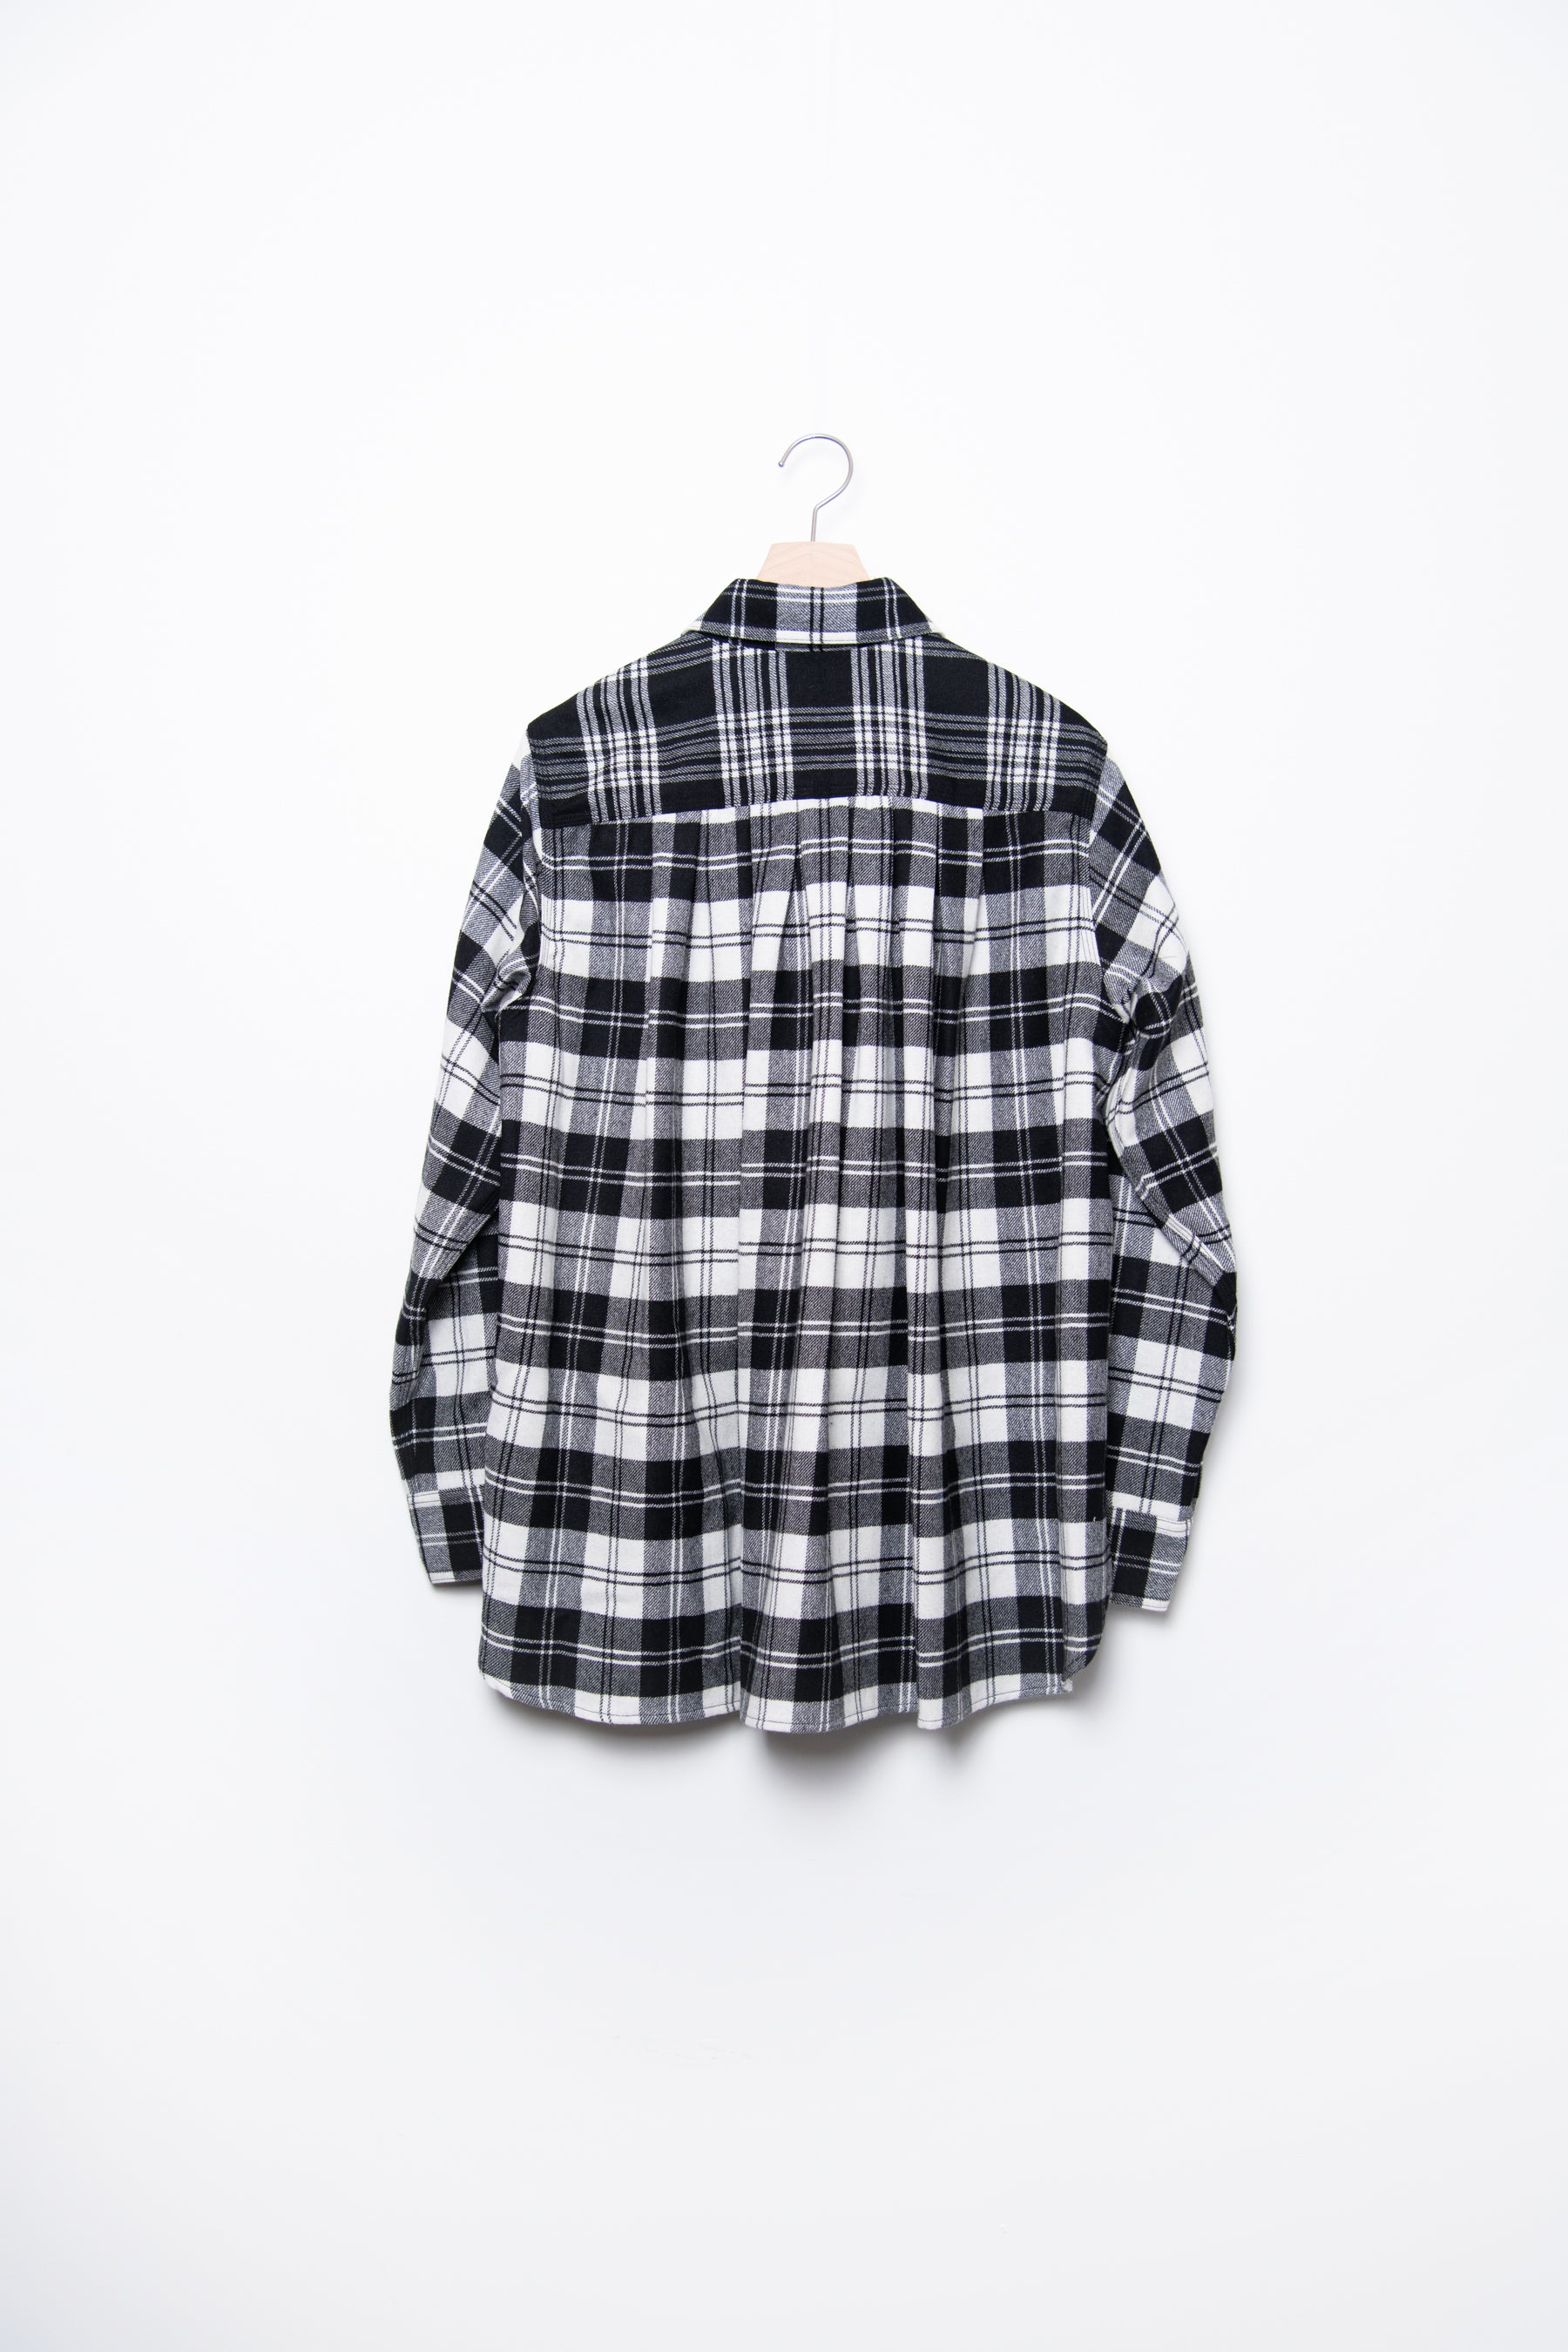 Pleated Flannel Shirt Black FU6-SH-02 – NOMAD